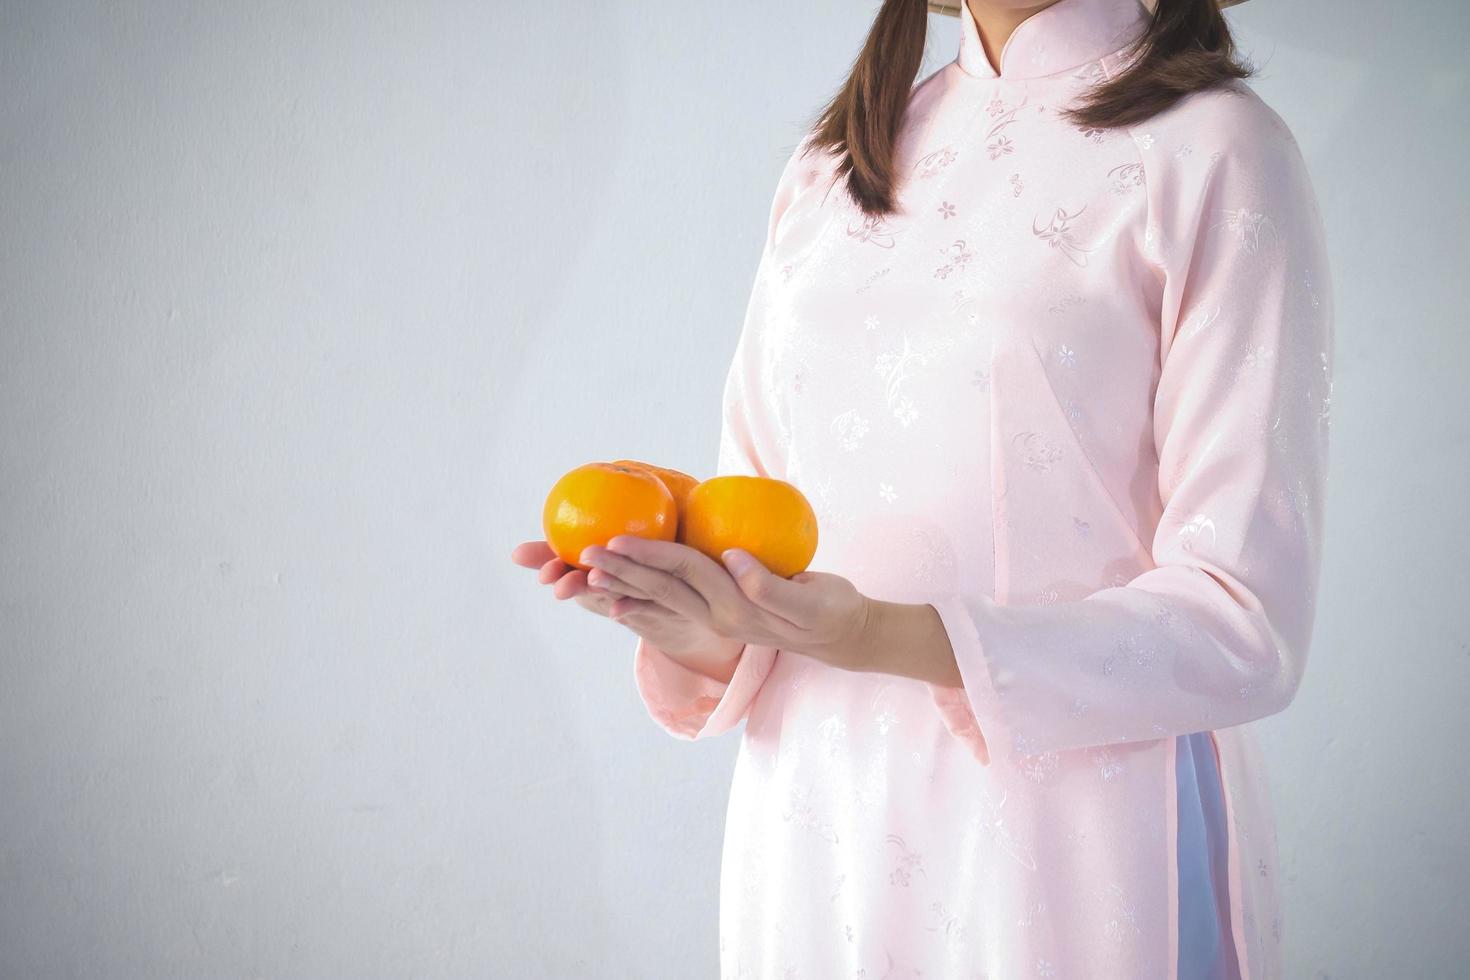 mooie vrouw in roze jurk en vietnam hoed met sinaasappel foto